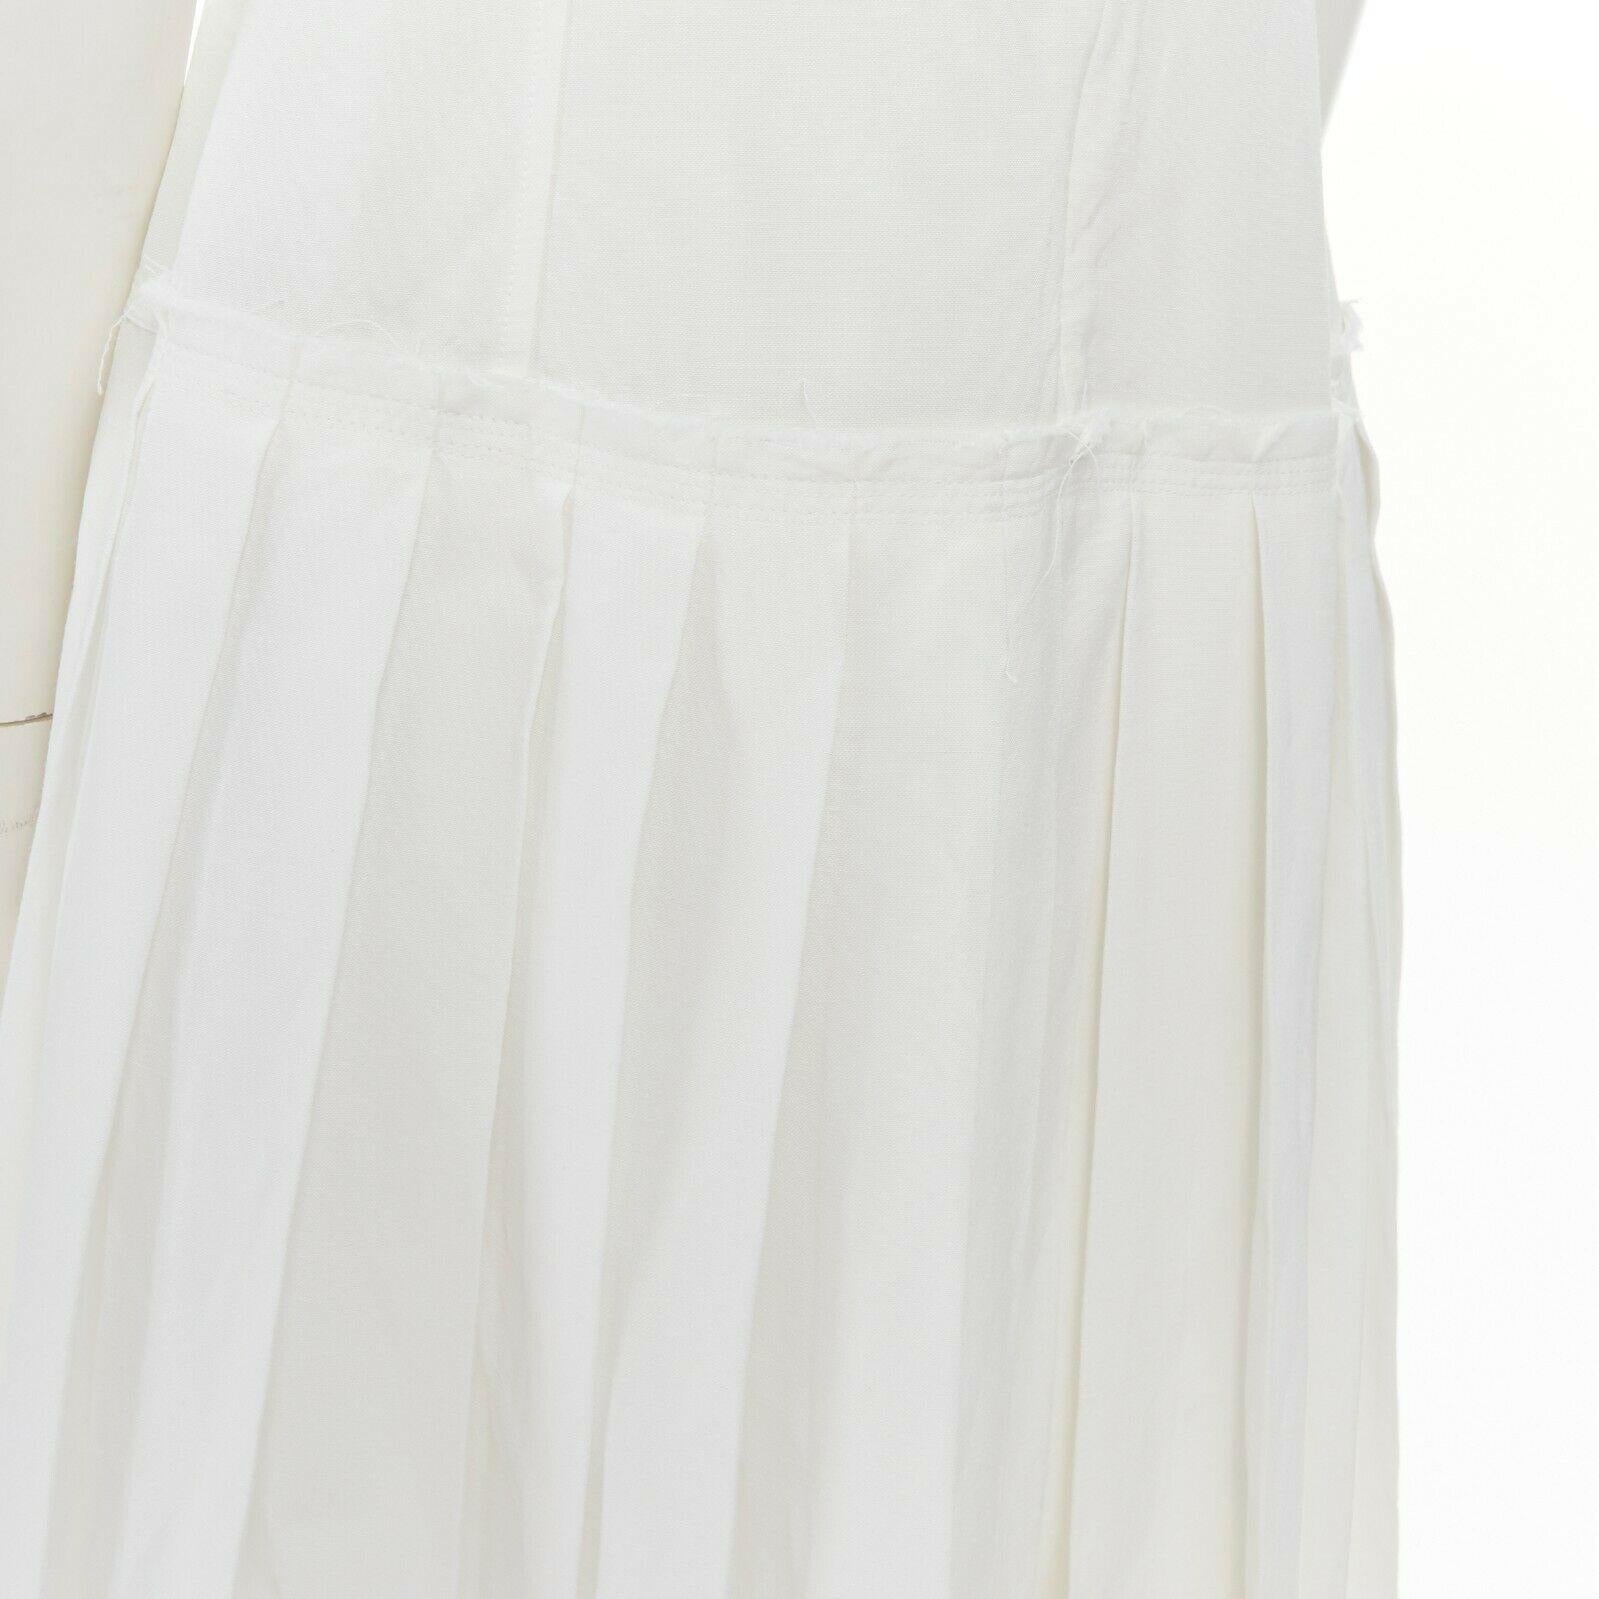 runway CELINE PHOEBE PHILO SS17 Yves Klein body print white frayed dress FR36 S 4